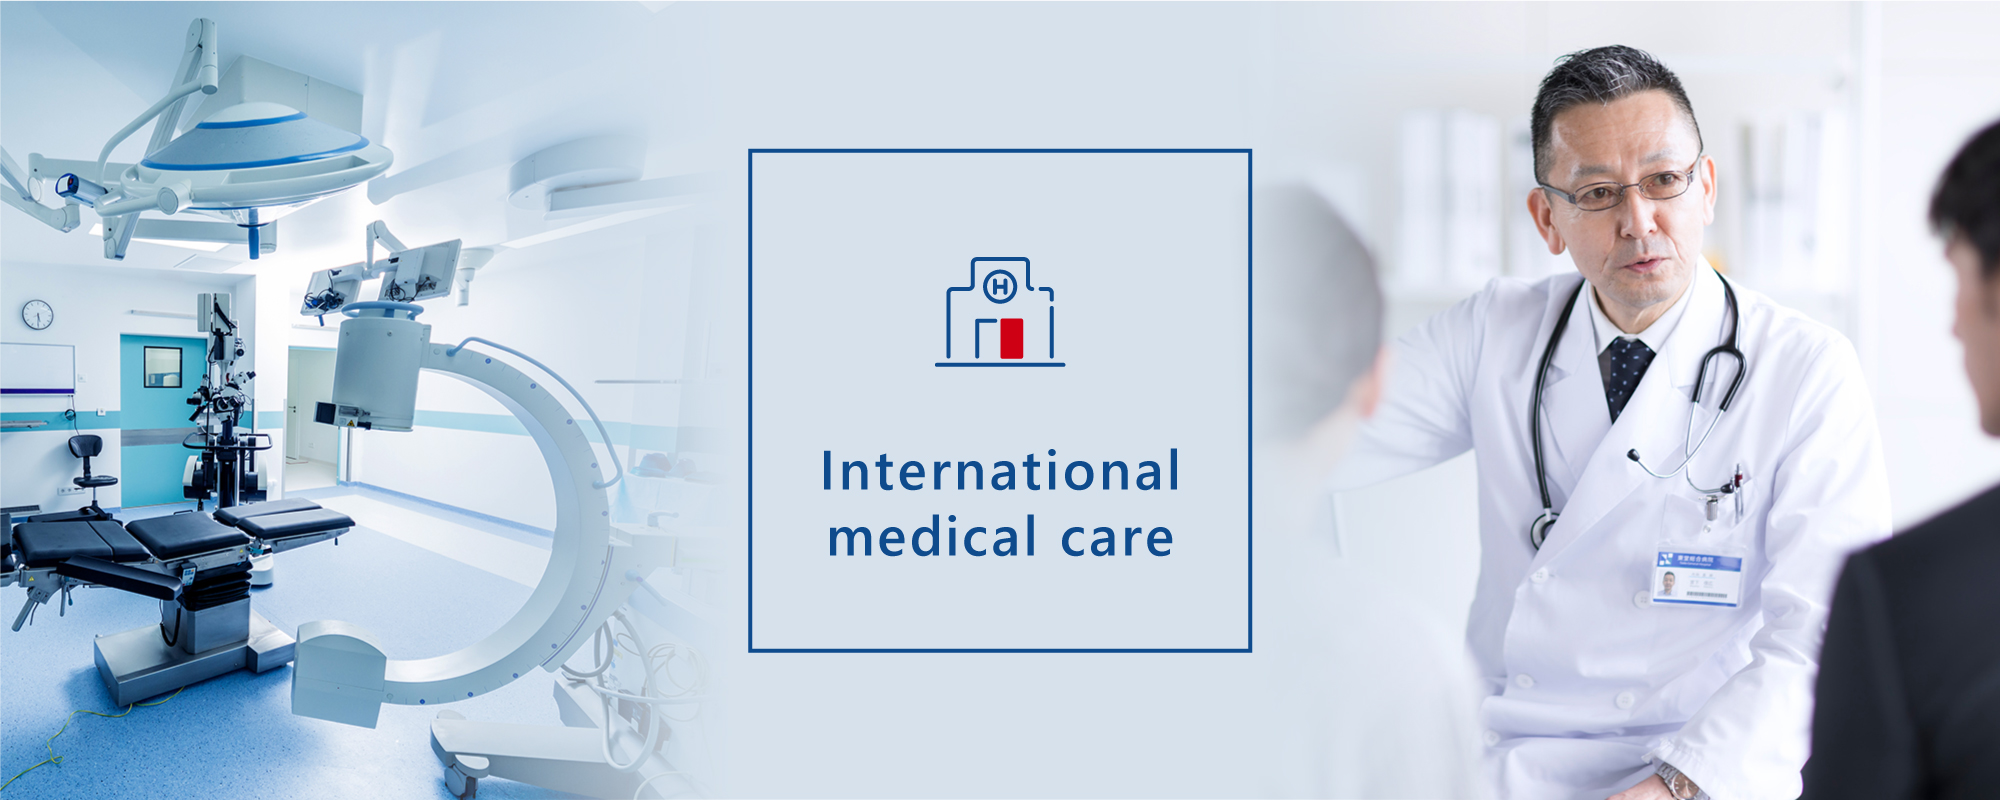 International medical care